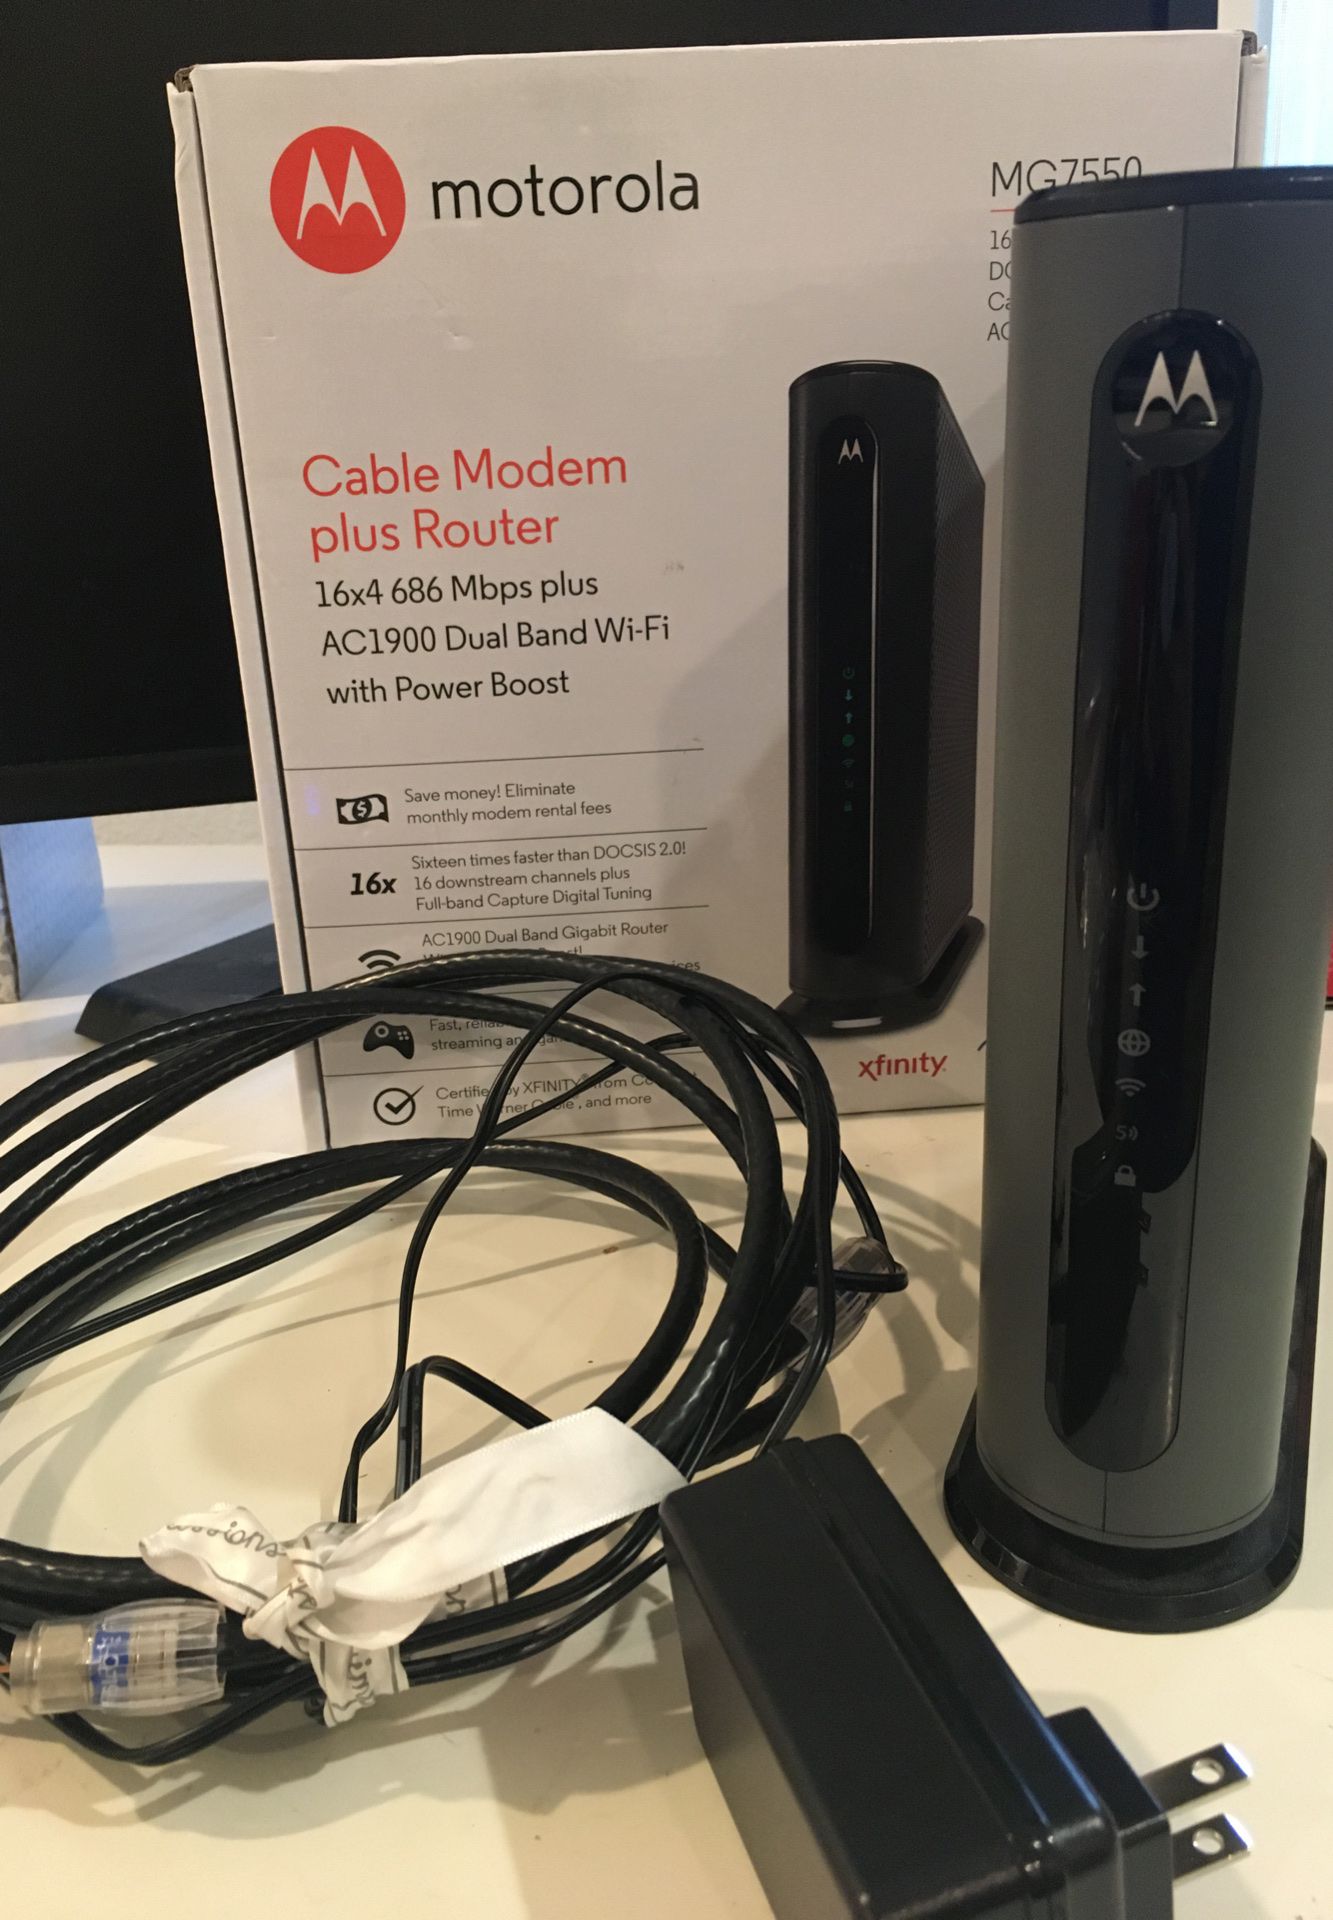 Motorola MG7550 Cable Modem plus Router